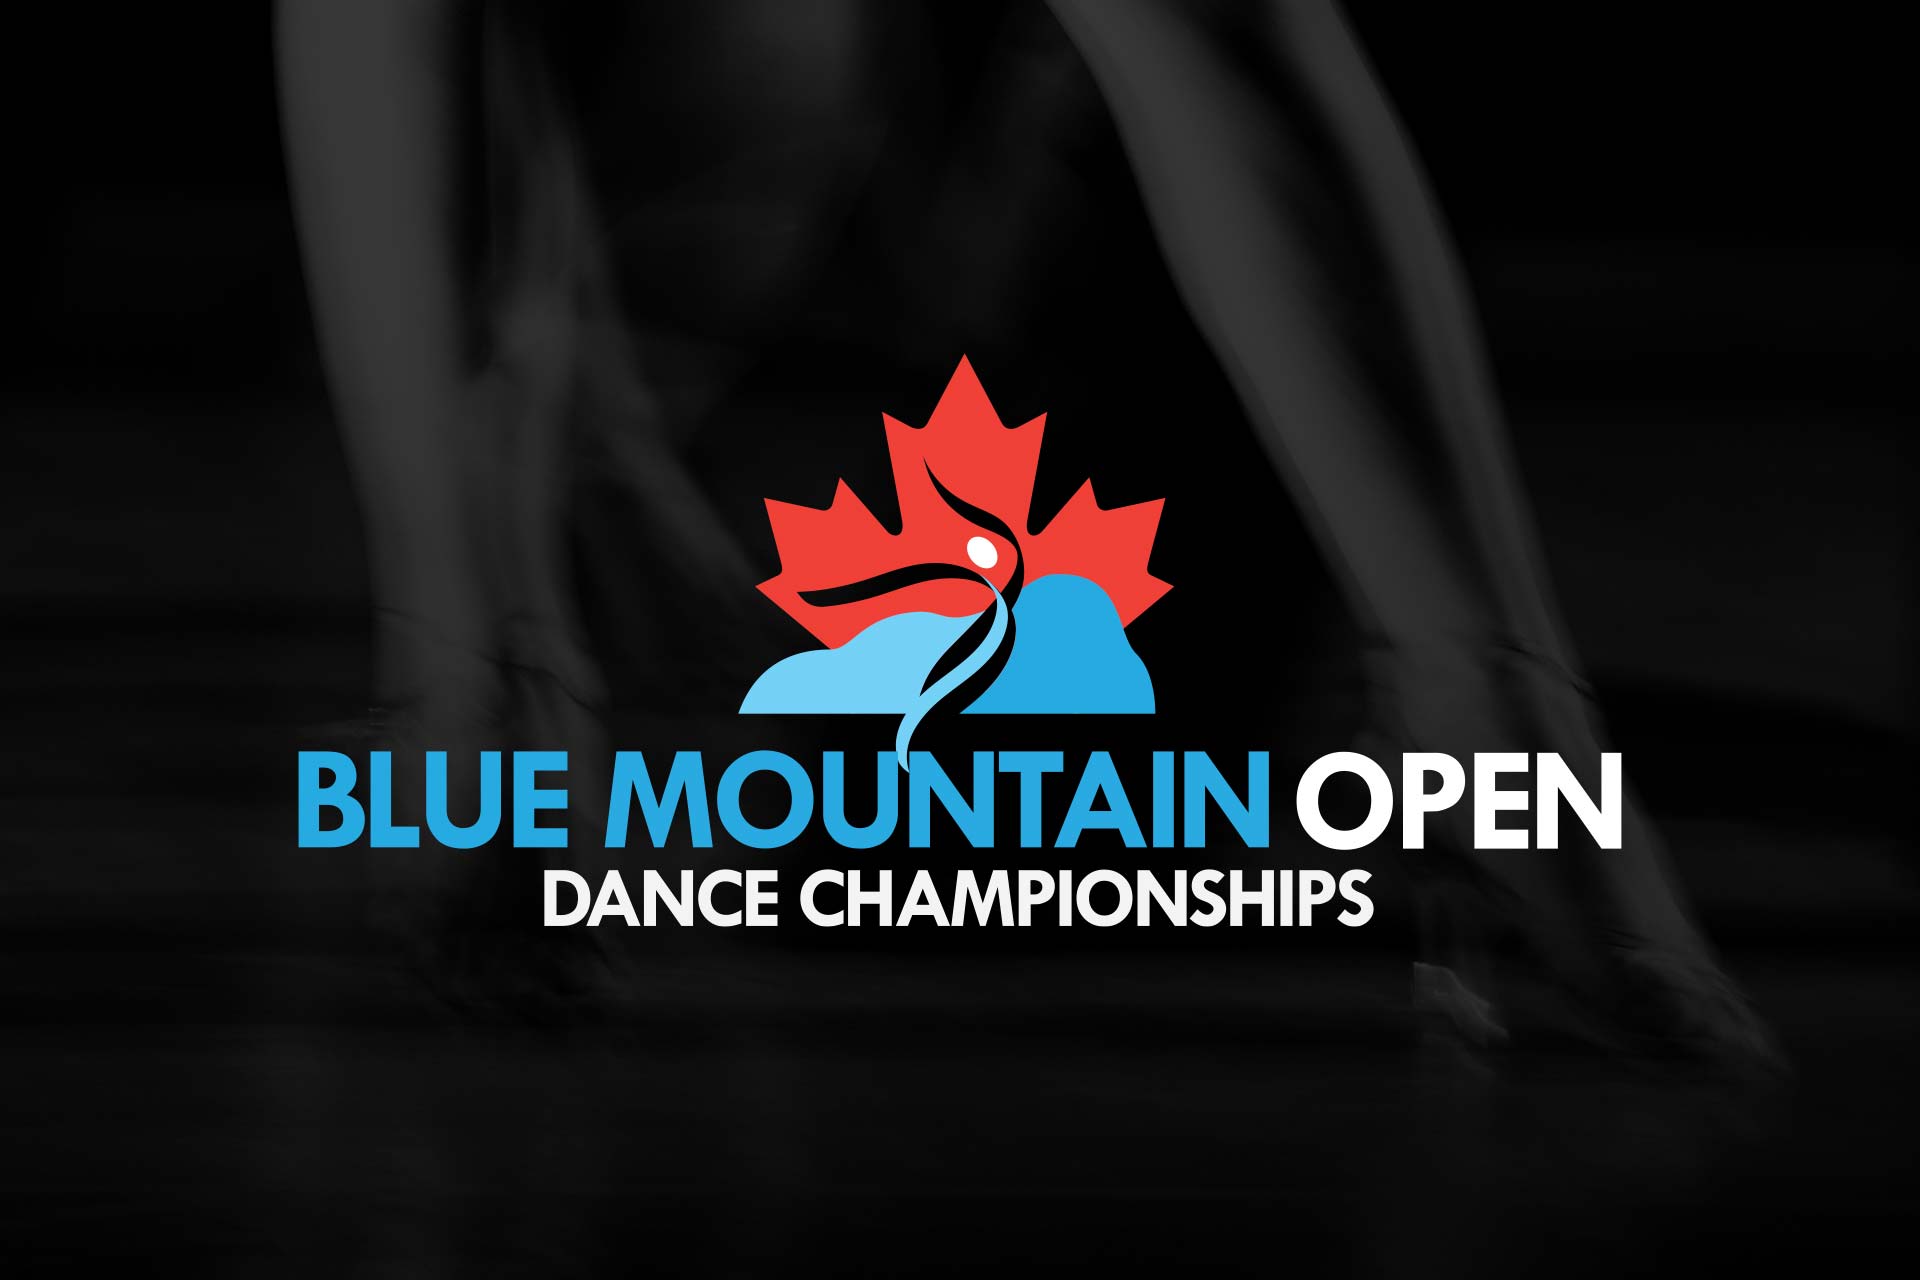 Blue Mountain Open dance championship